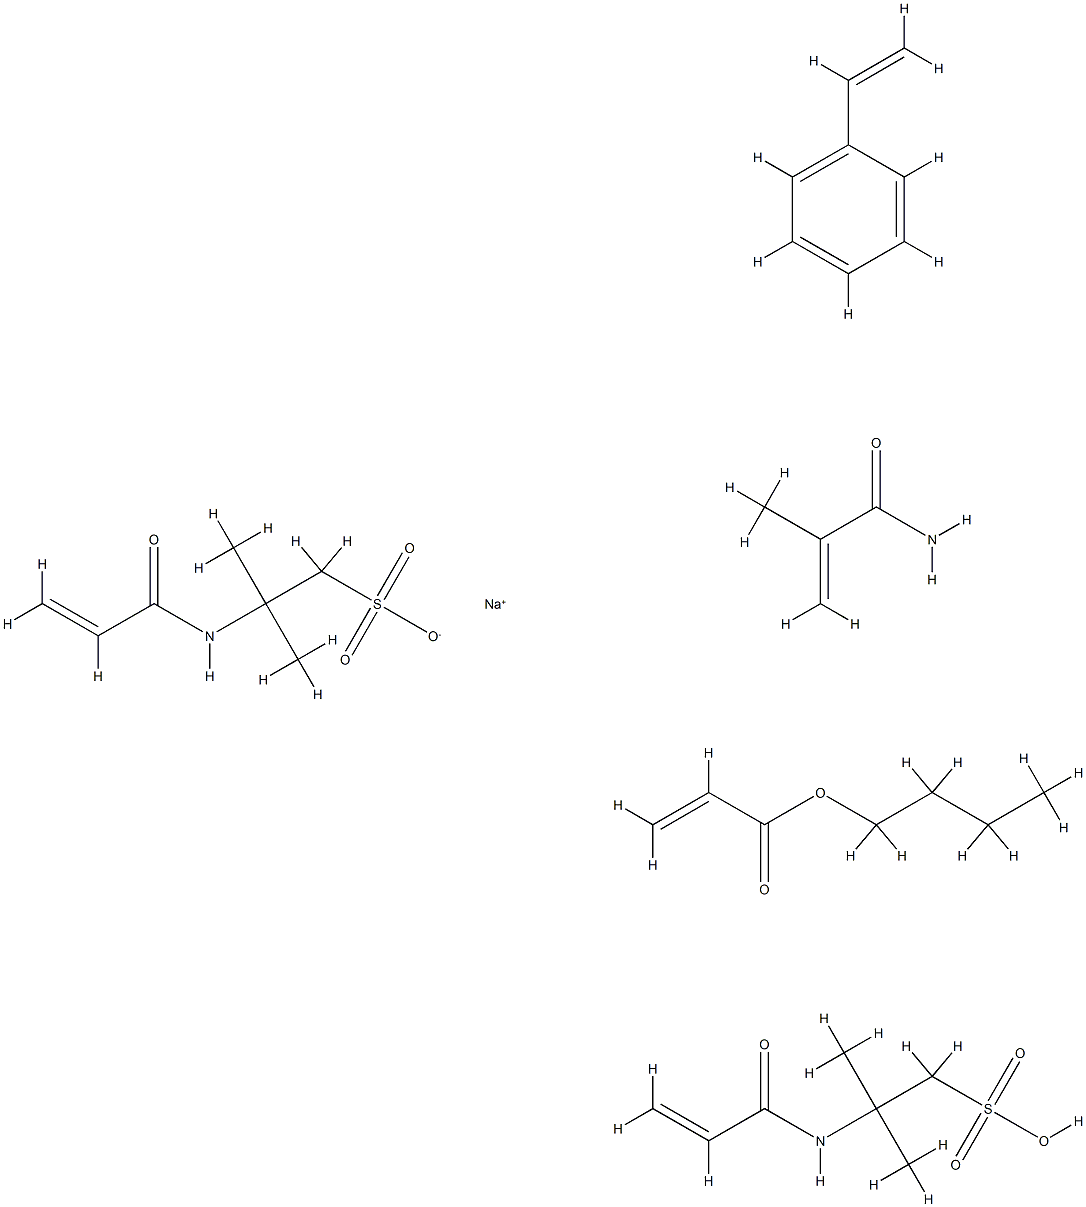 2-Propenoic acid, butyl ester, polymer with ethenylbenzene, 2-methyl-2-[(1-oxo-2-propenyl) amino]-1-propanesulfonic acid, 2-methyl-2-[(1-oxo-2-propenyl) amino]-1-propanesulfonic acid monosodium salt and 2-methyl-2-propenamide|